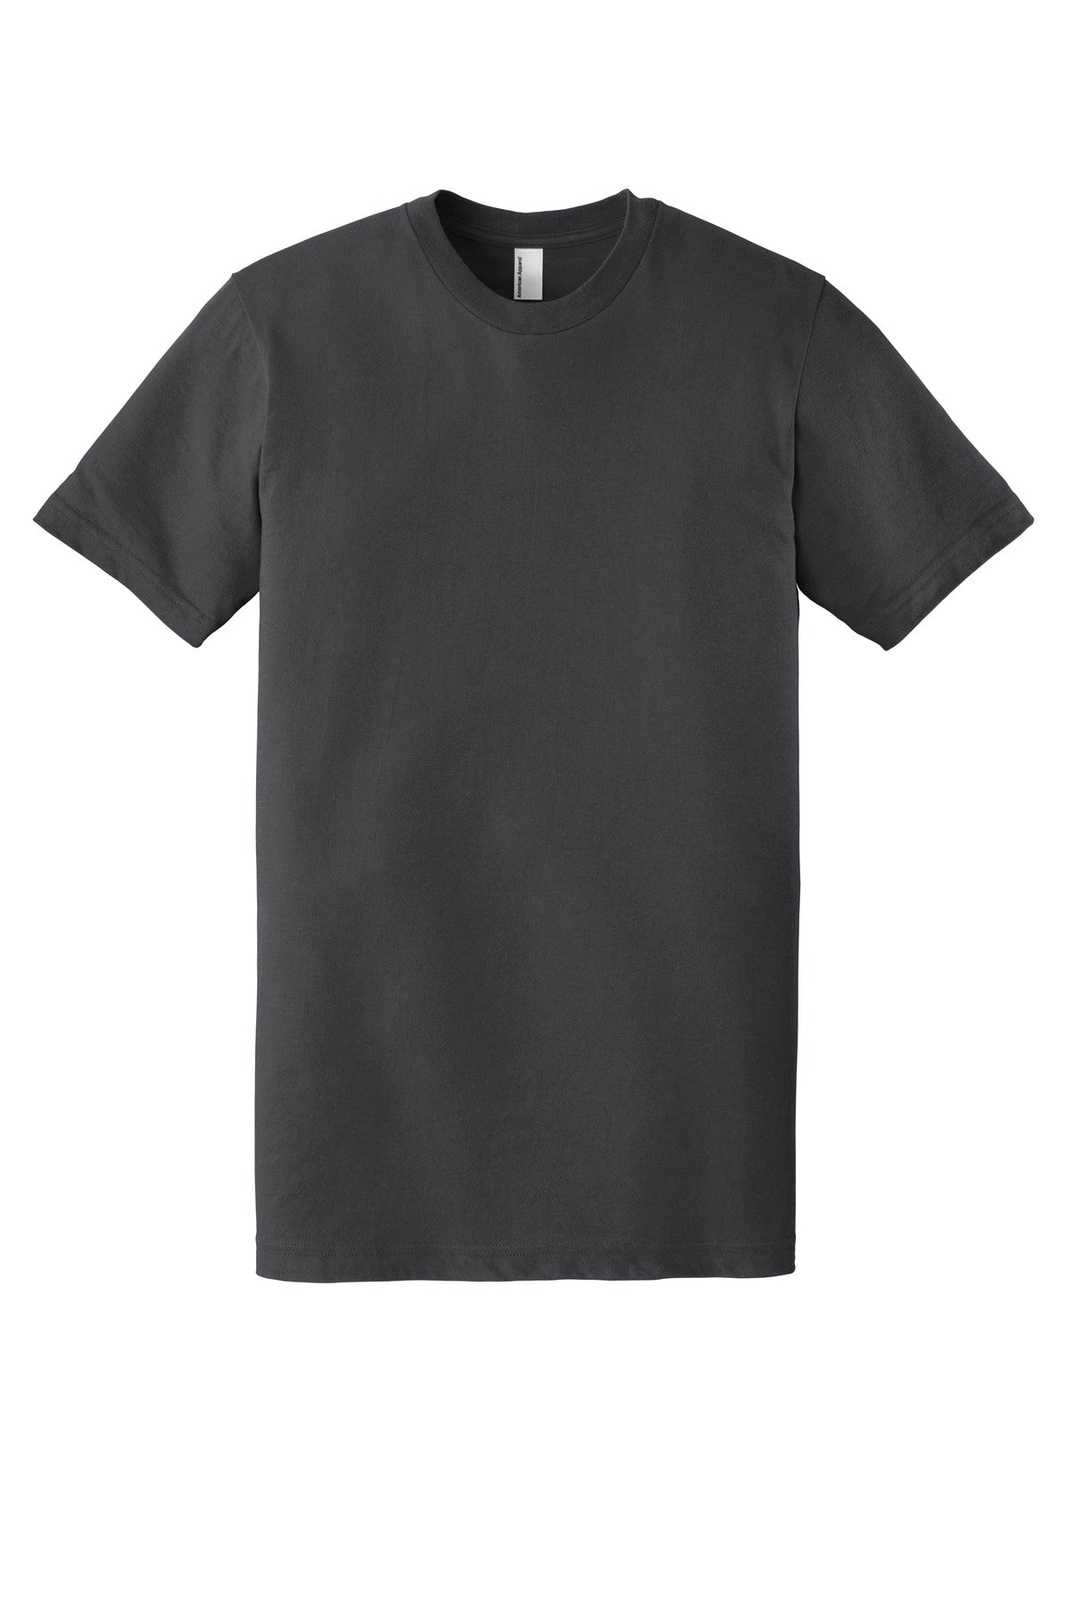 American Apparel 2001W Fine Jersey T-Shirt - Asphalt - HIT a Double